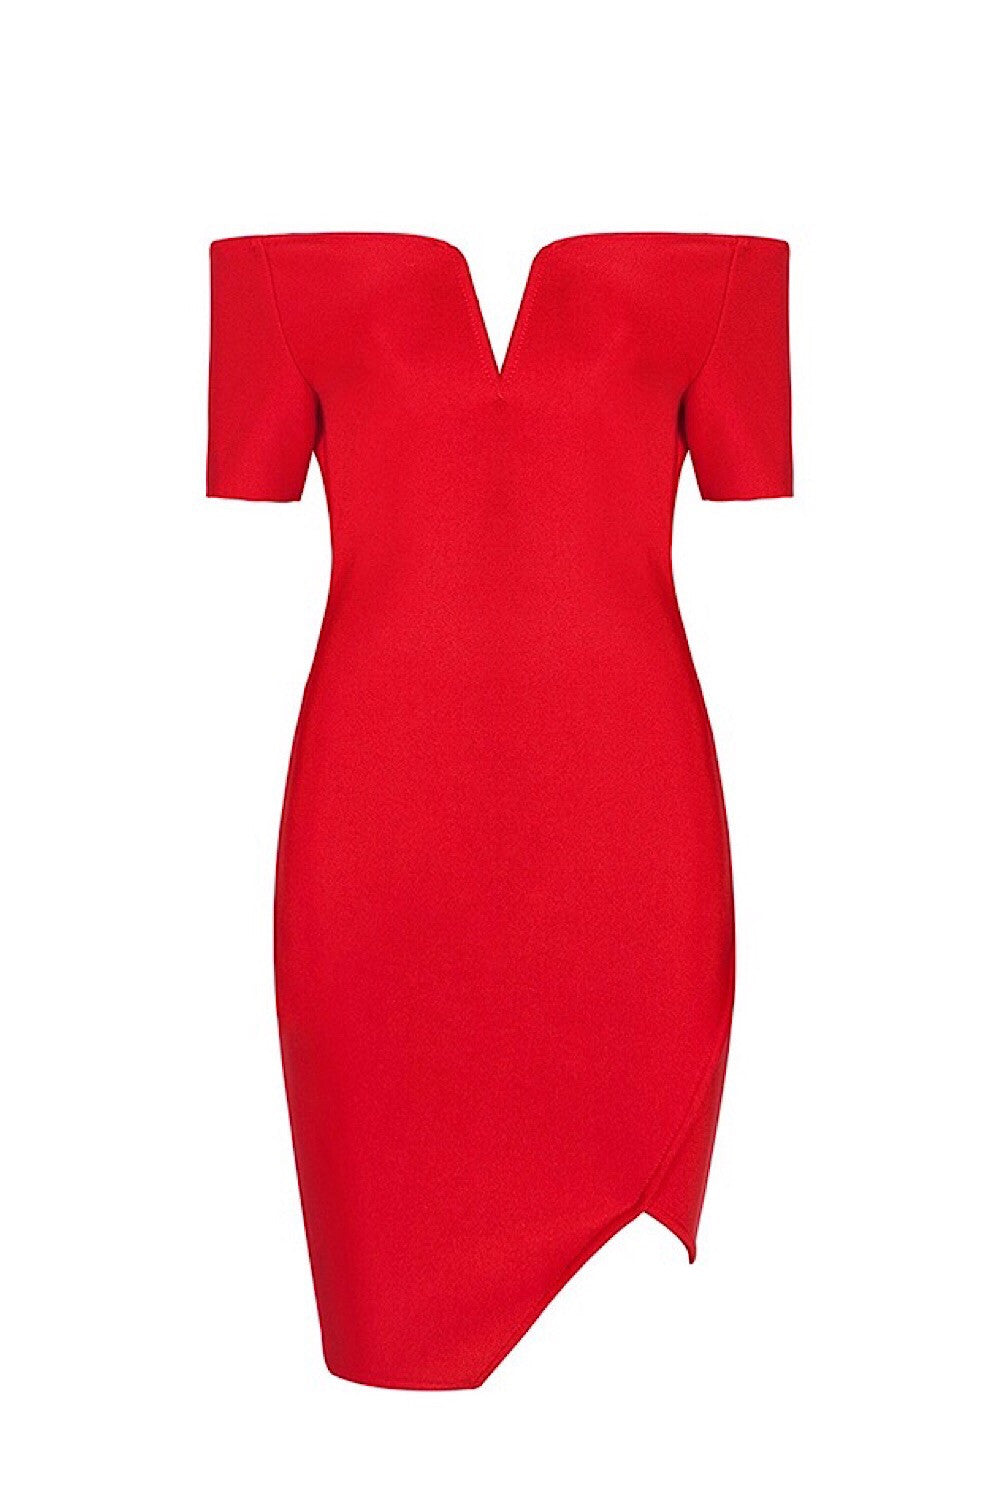 Señorita Red Bandage Dress